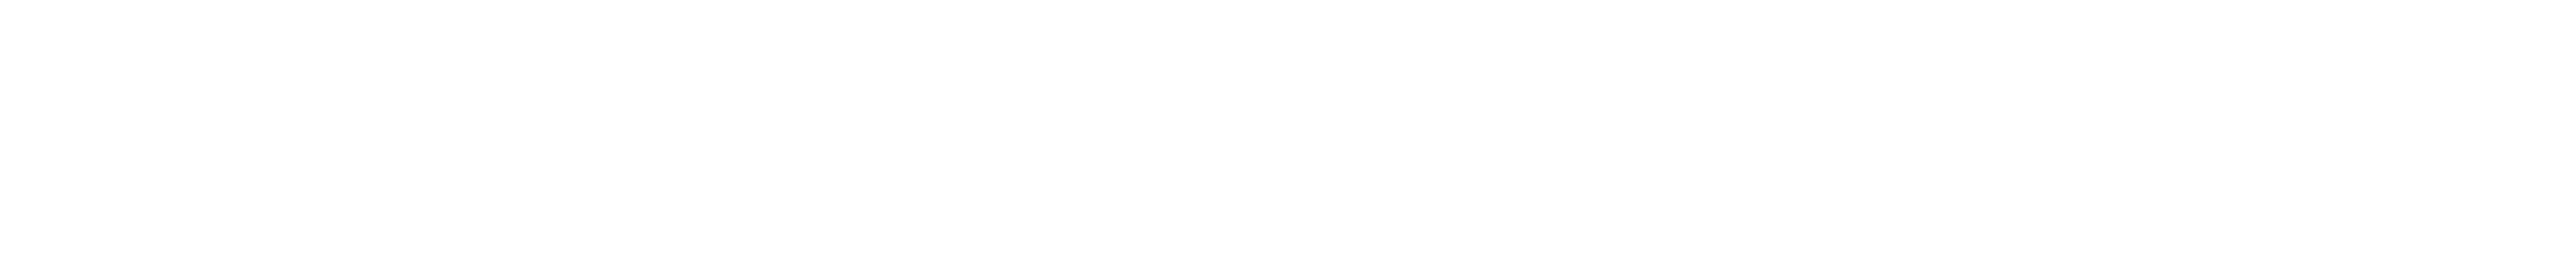 Beastie Boys Story logo